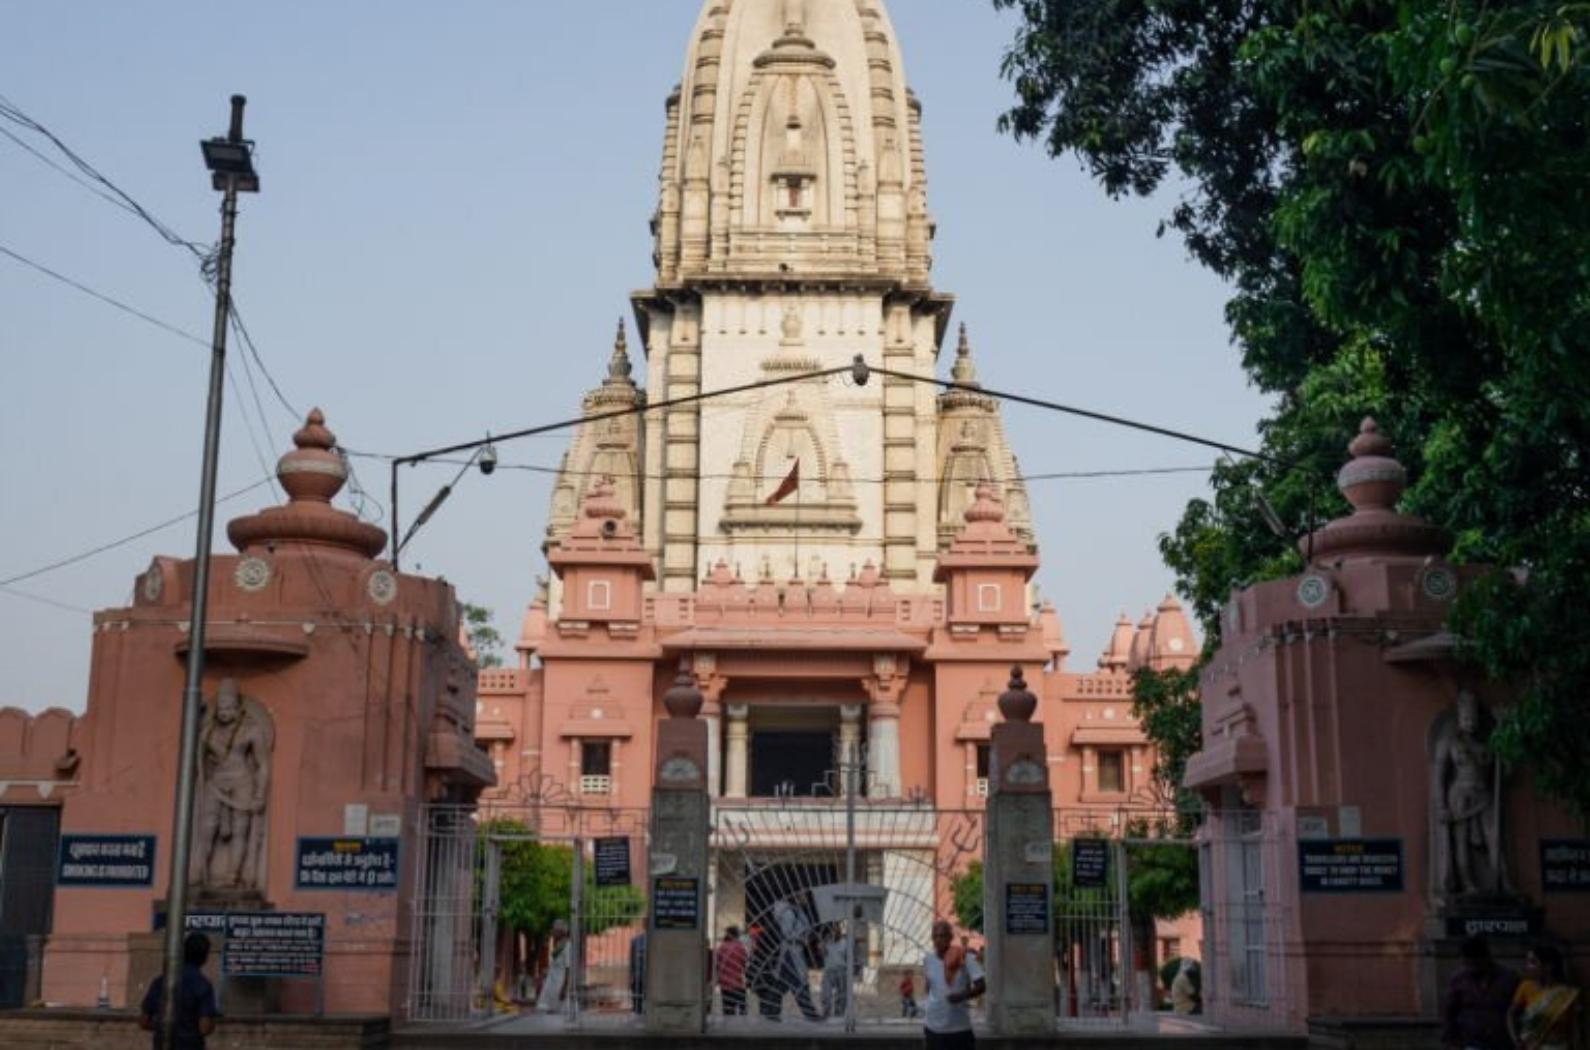 Main entrance to the Shri Vishwanath Mandir temple, inside the campus of the Benares Hindu University. With an impressive tall tower. Varanasi, India